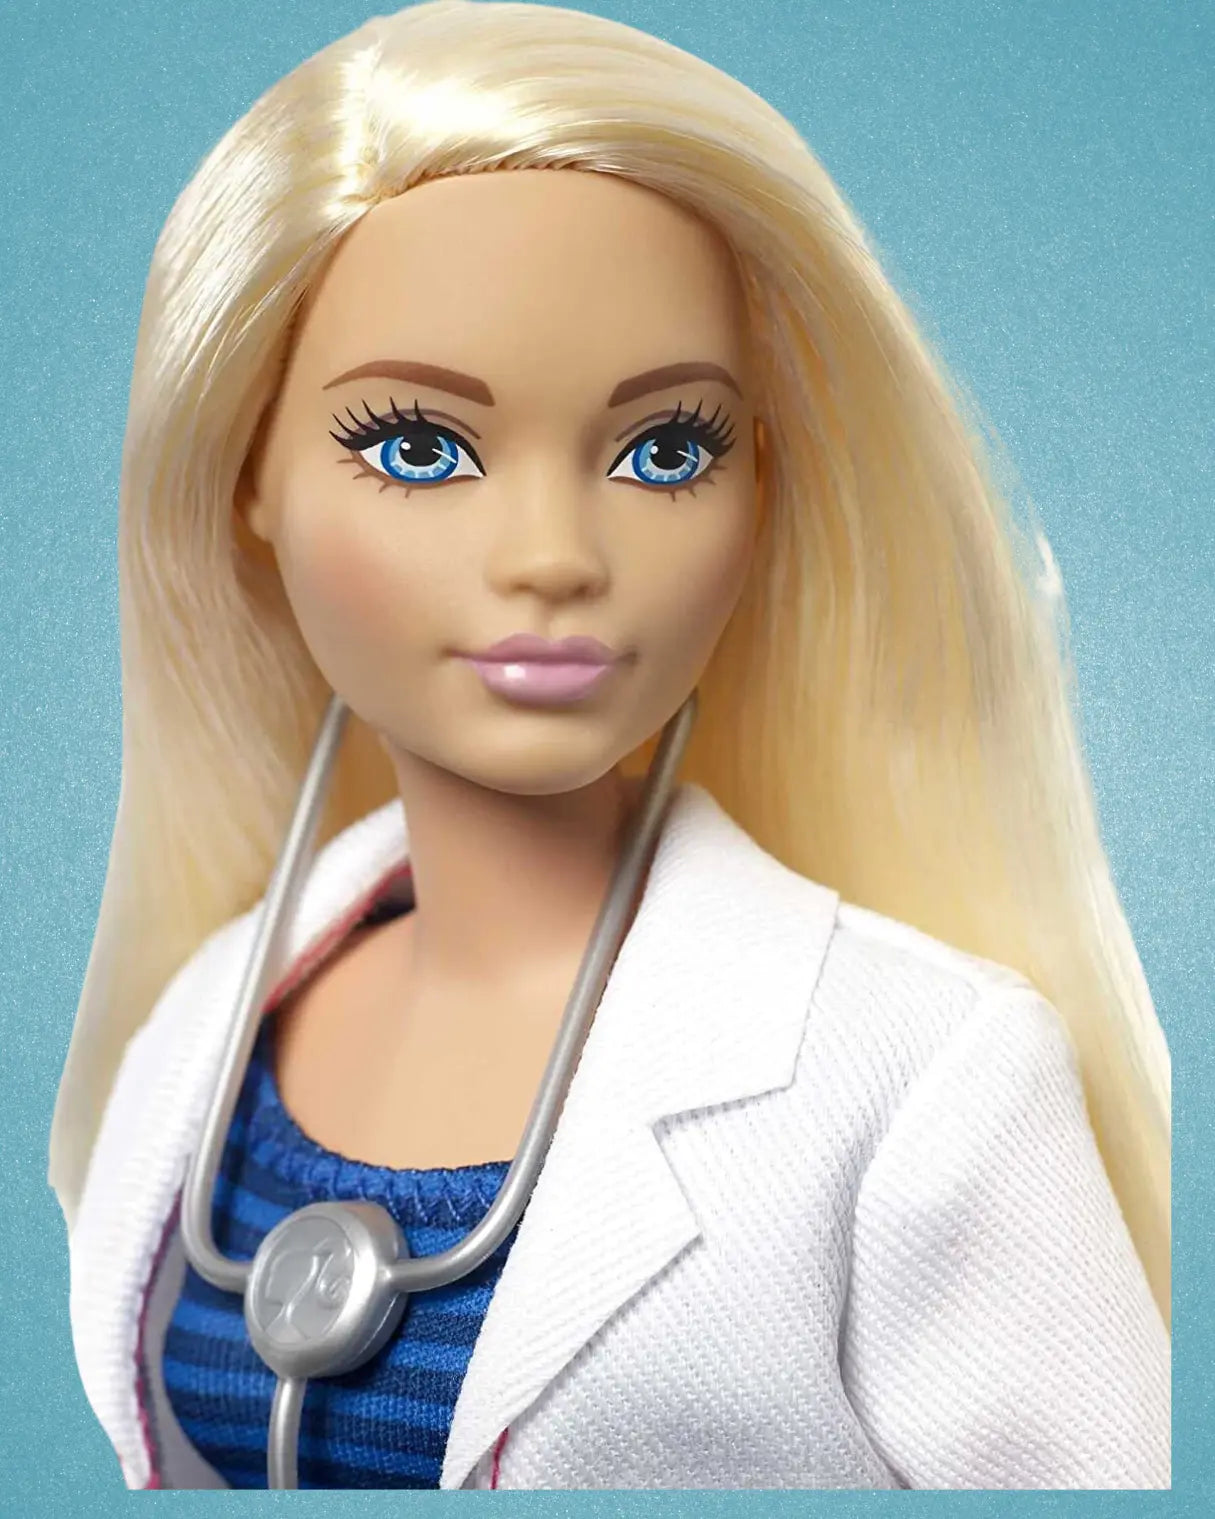 Barbie Curvy Doctor Doll Curvy, Dressed in White Coat